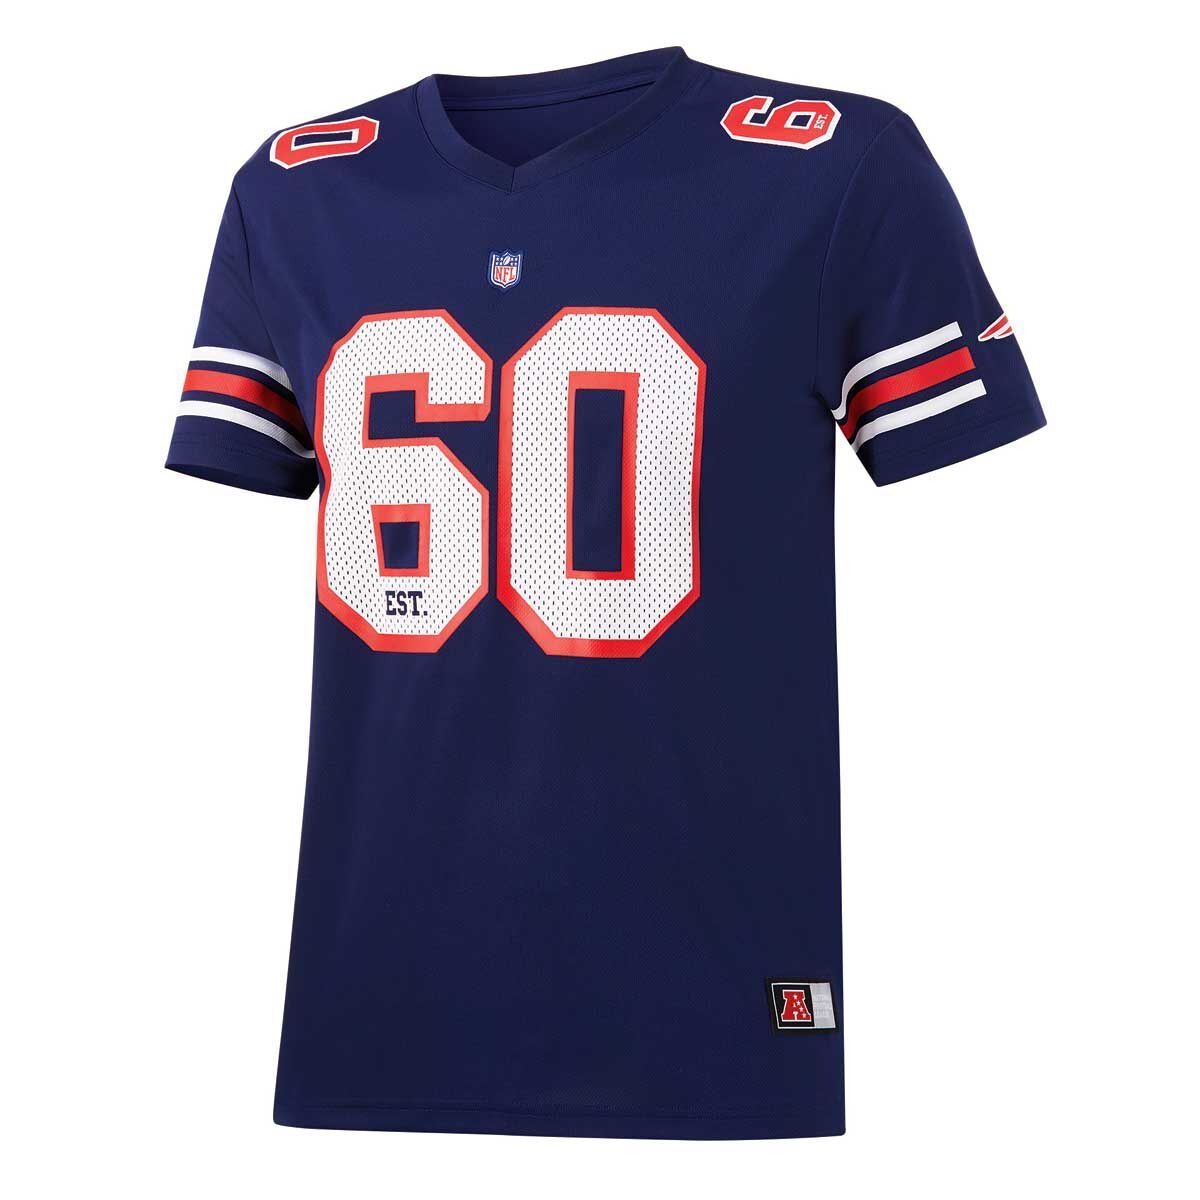 New England Patriots Merchandise - rebel